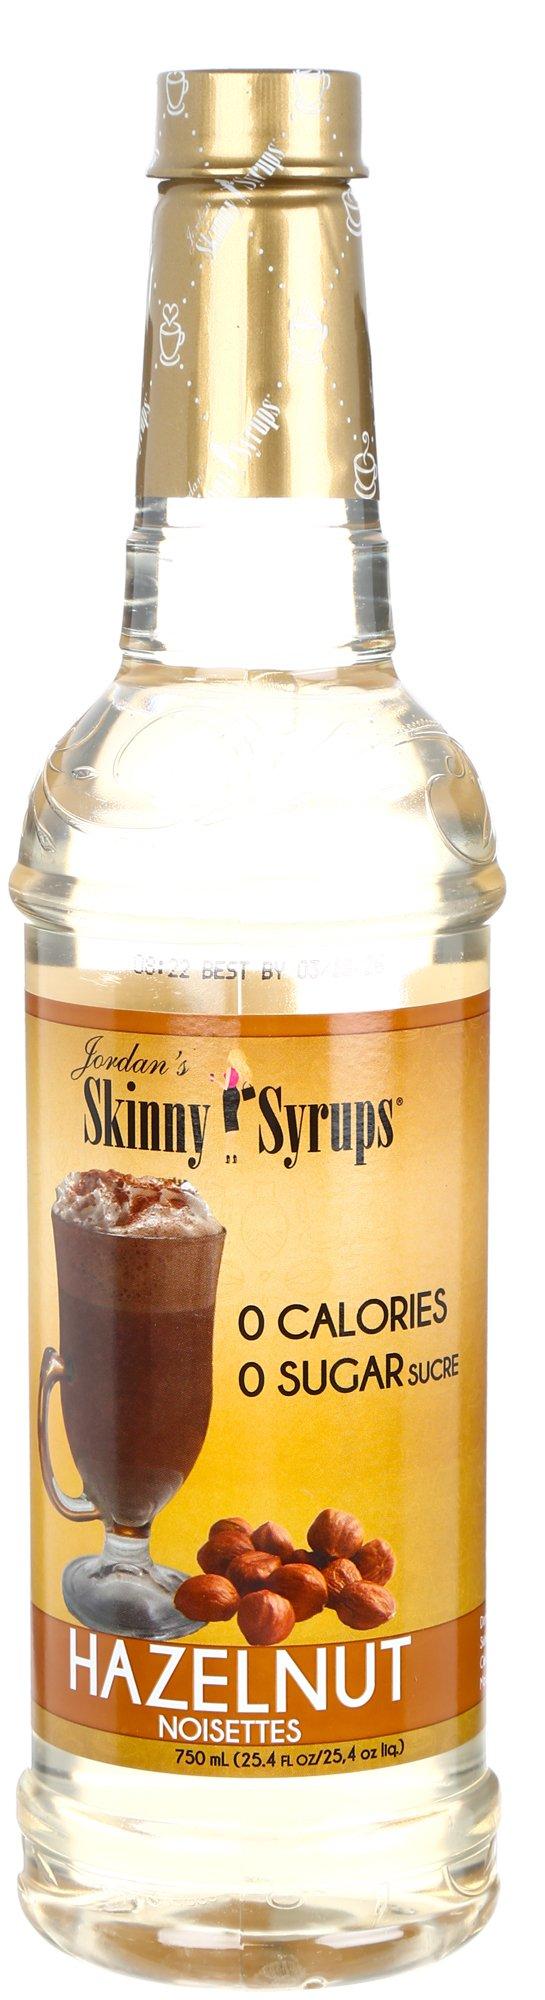 25 oz Hazelnut Skinny Syrup